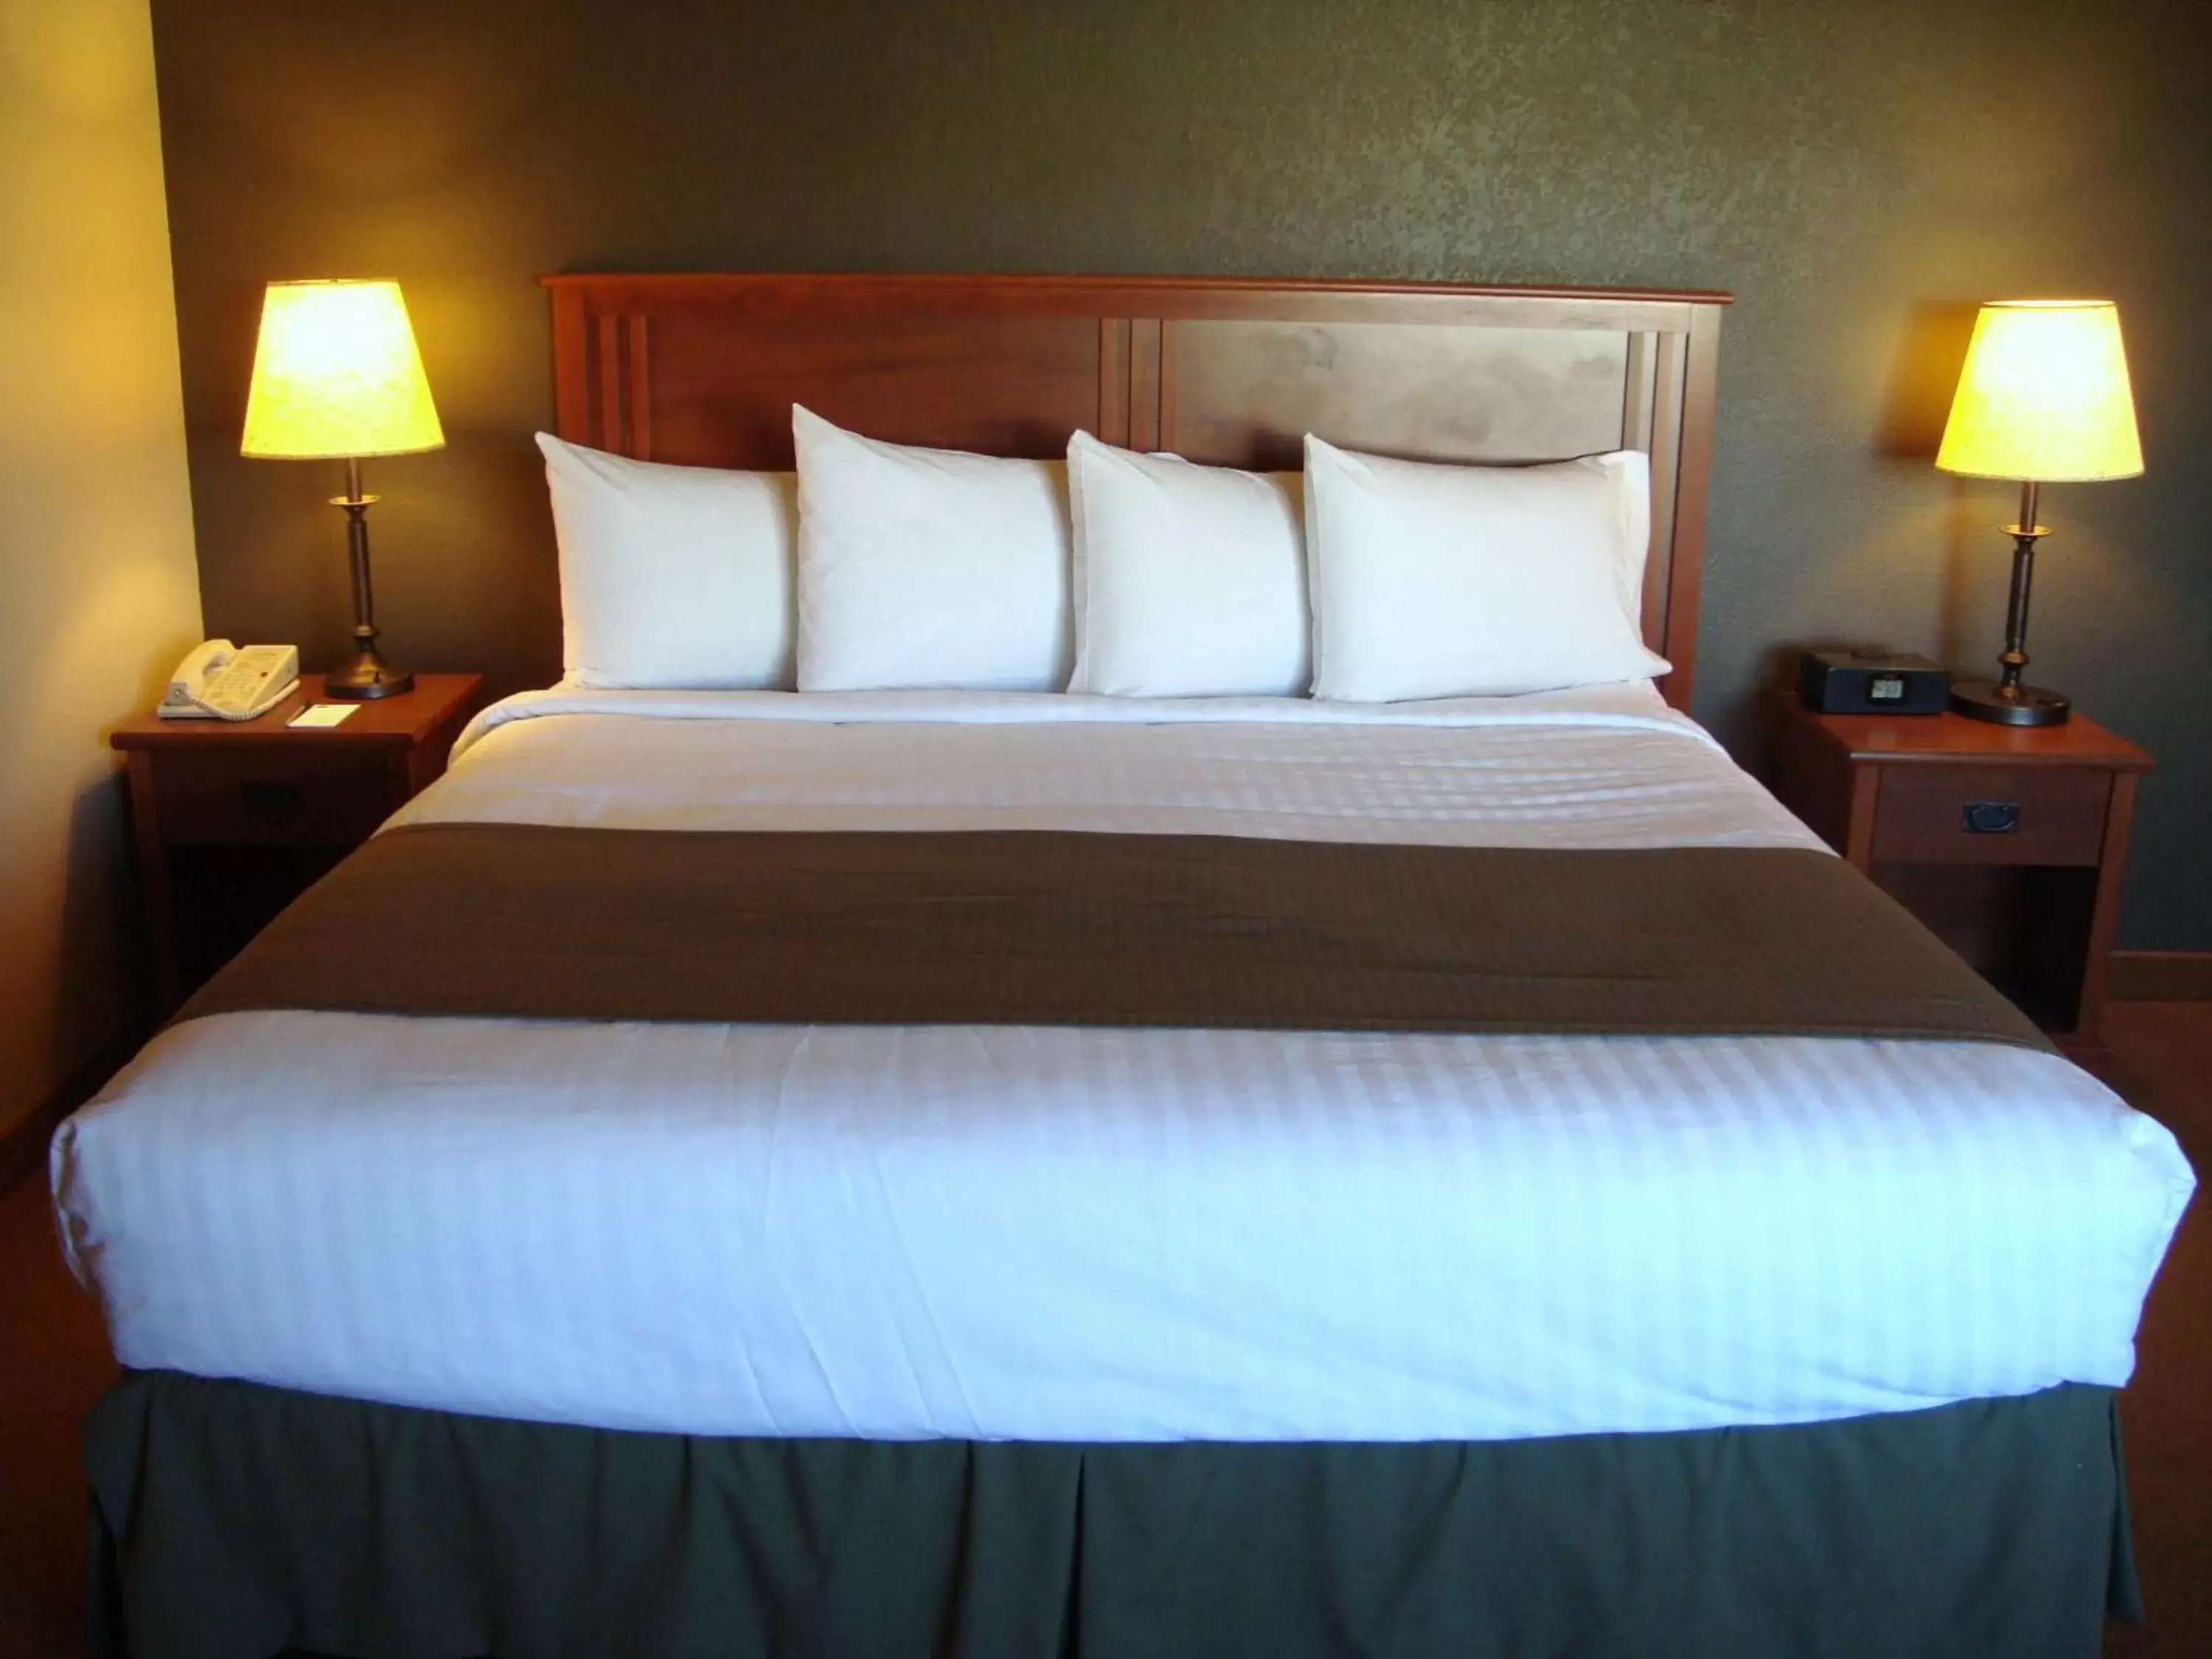 Bed in AmericInn by Wyndham Sioux City